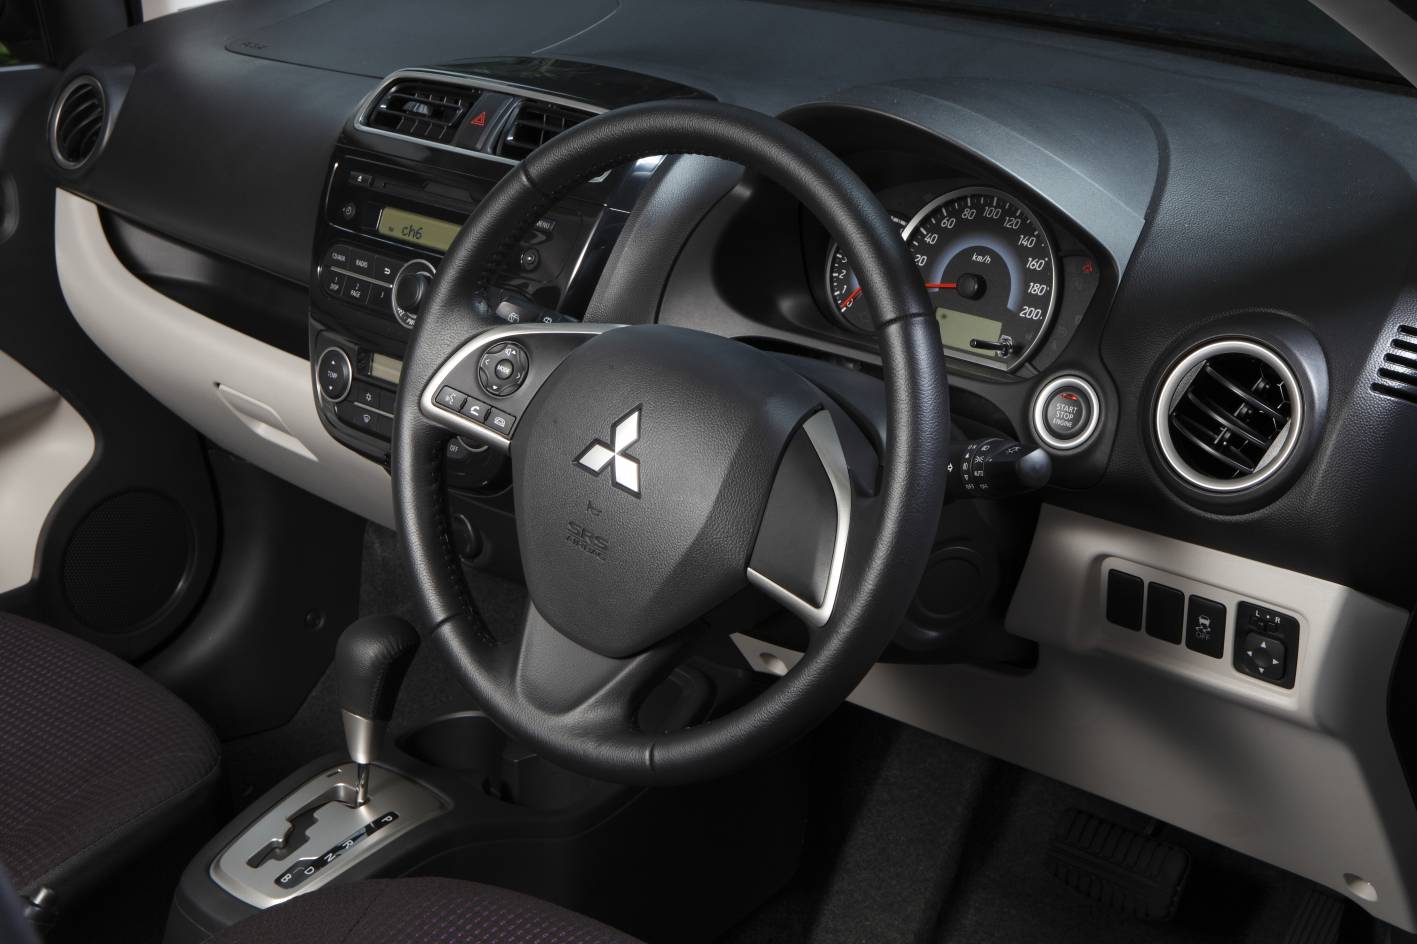 2013 Mitsubishi Mirage Interior 1 Forcegt Com